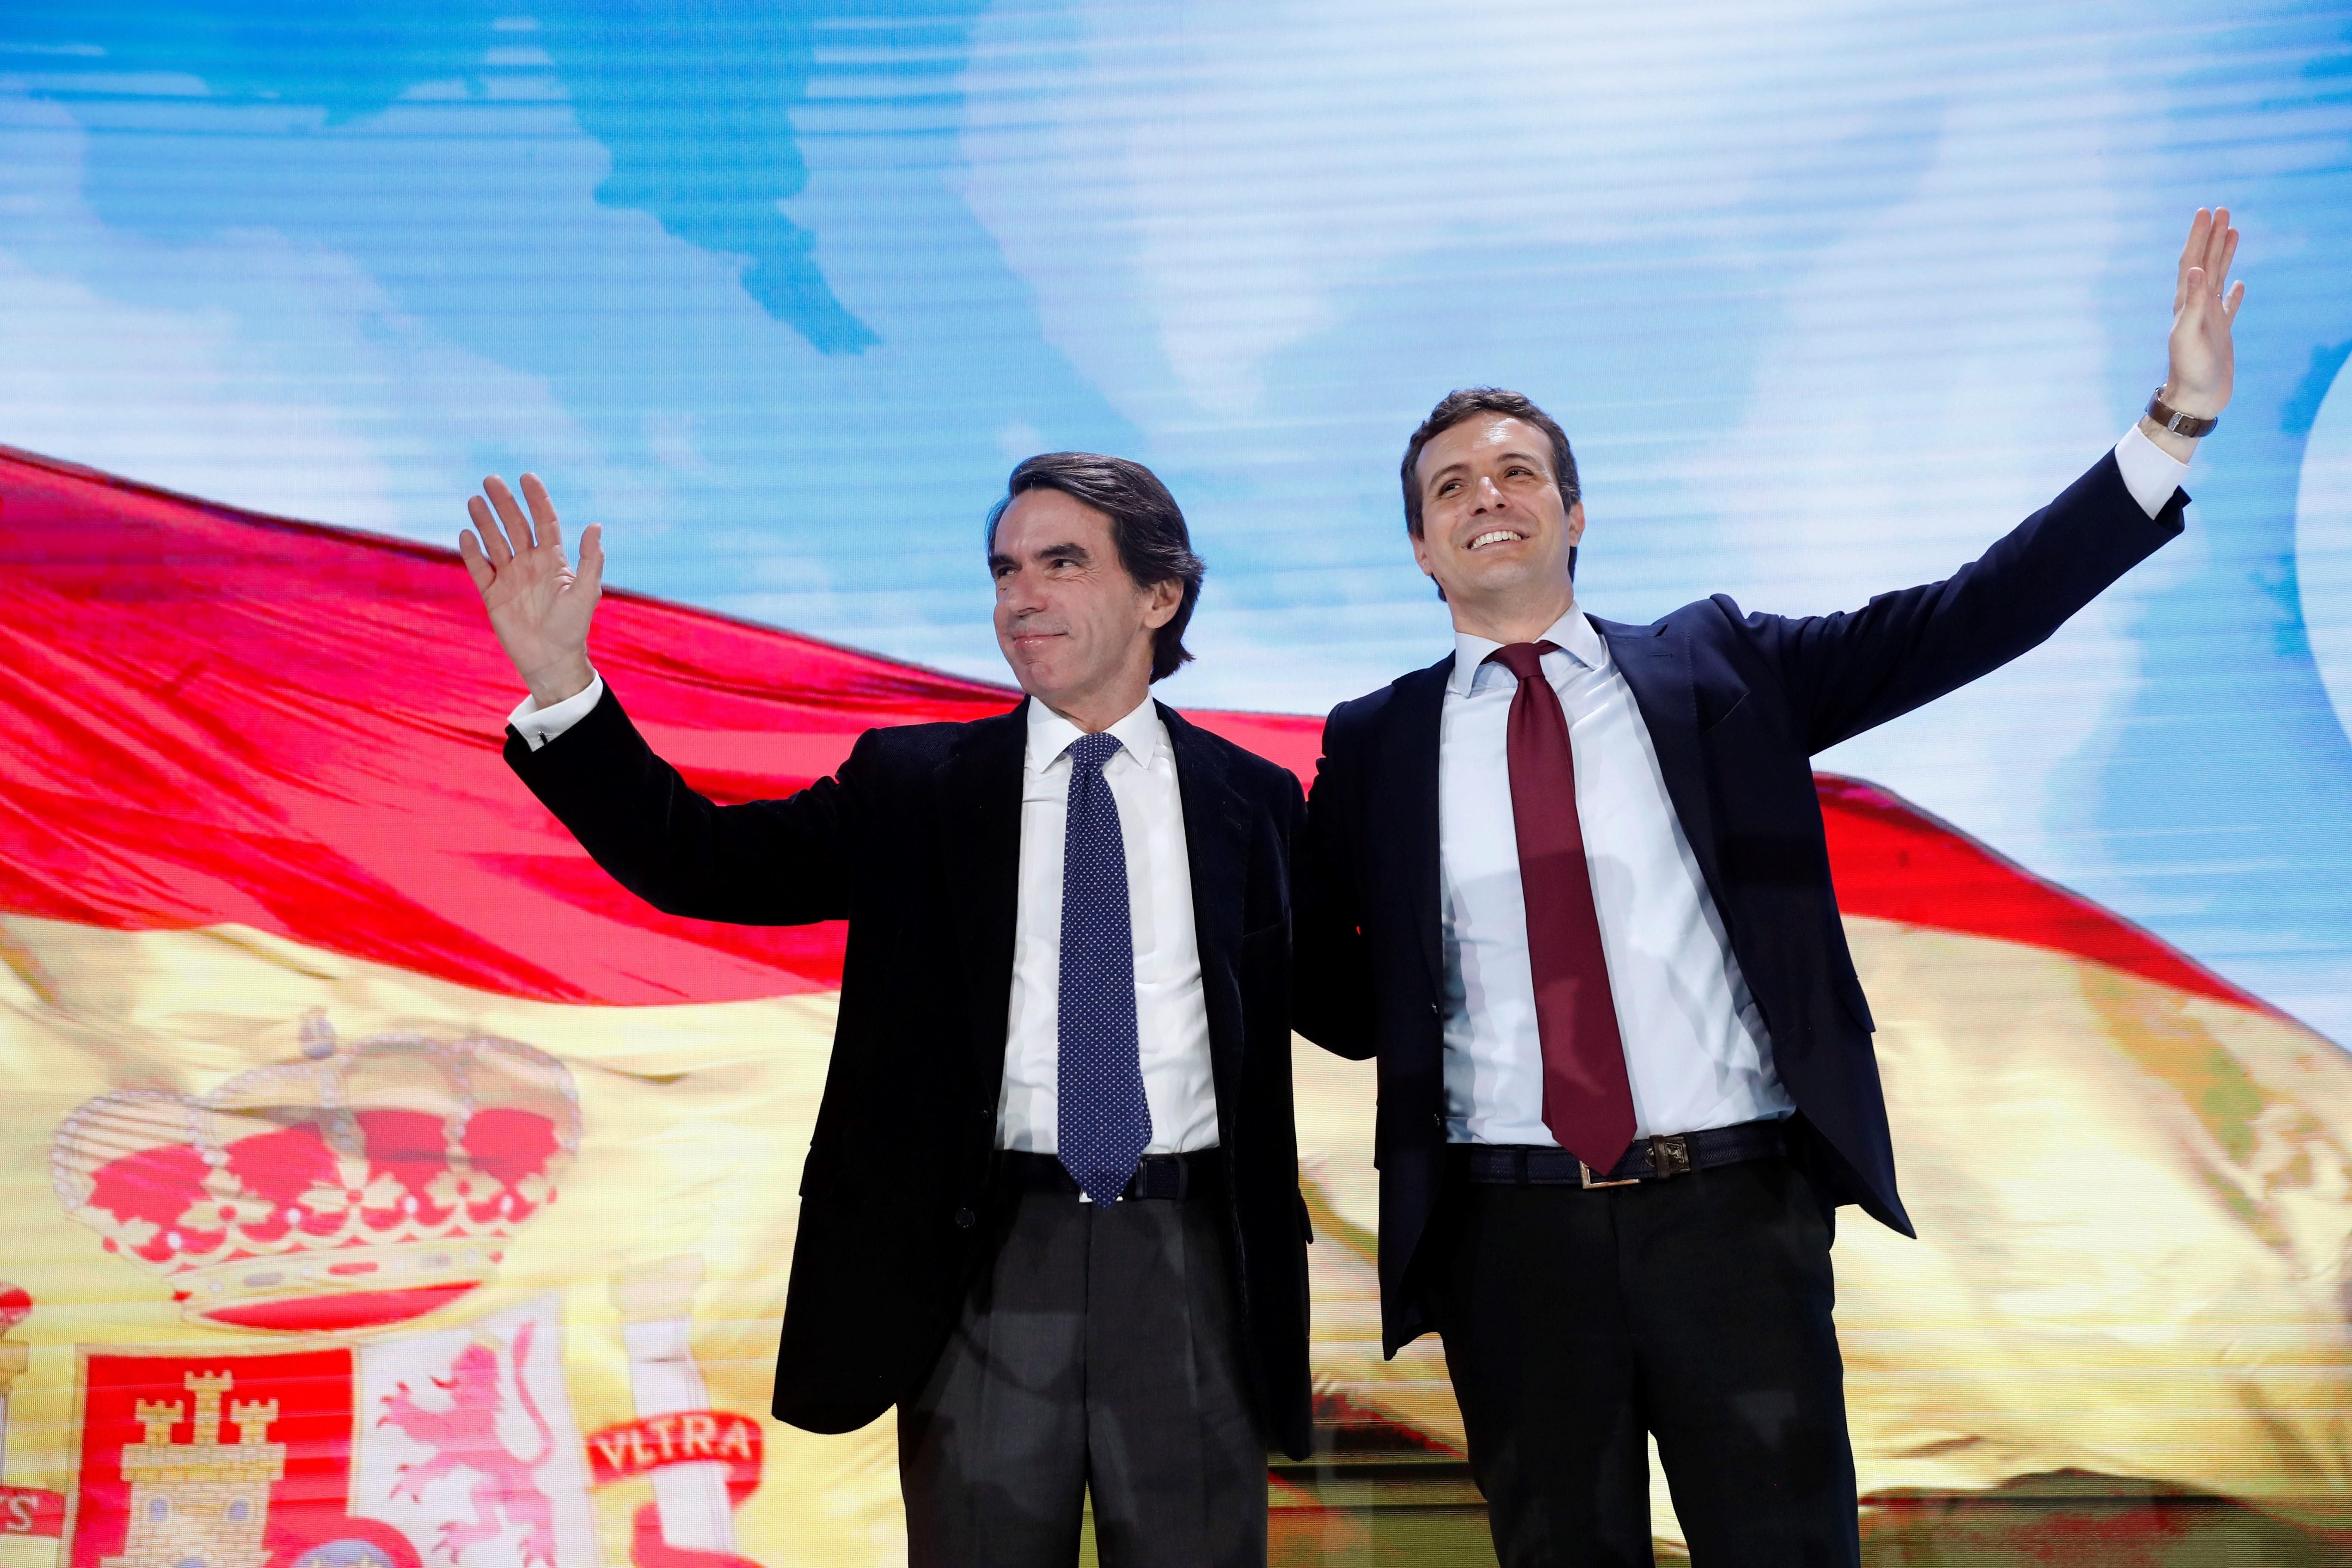 La Faes de Aznar acusa a los votantes de centroderecha de "ignorancia temeraria"